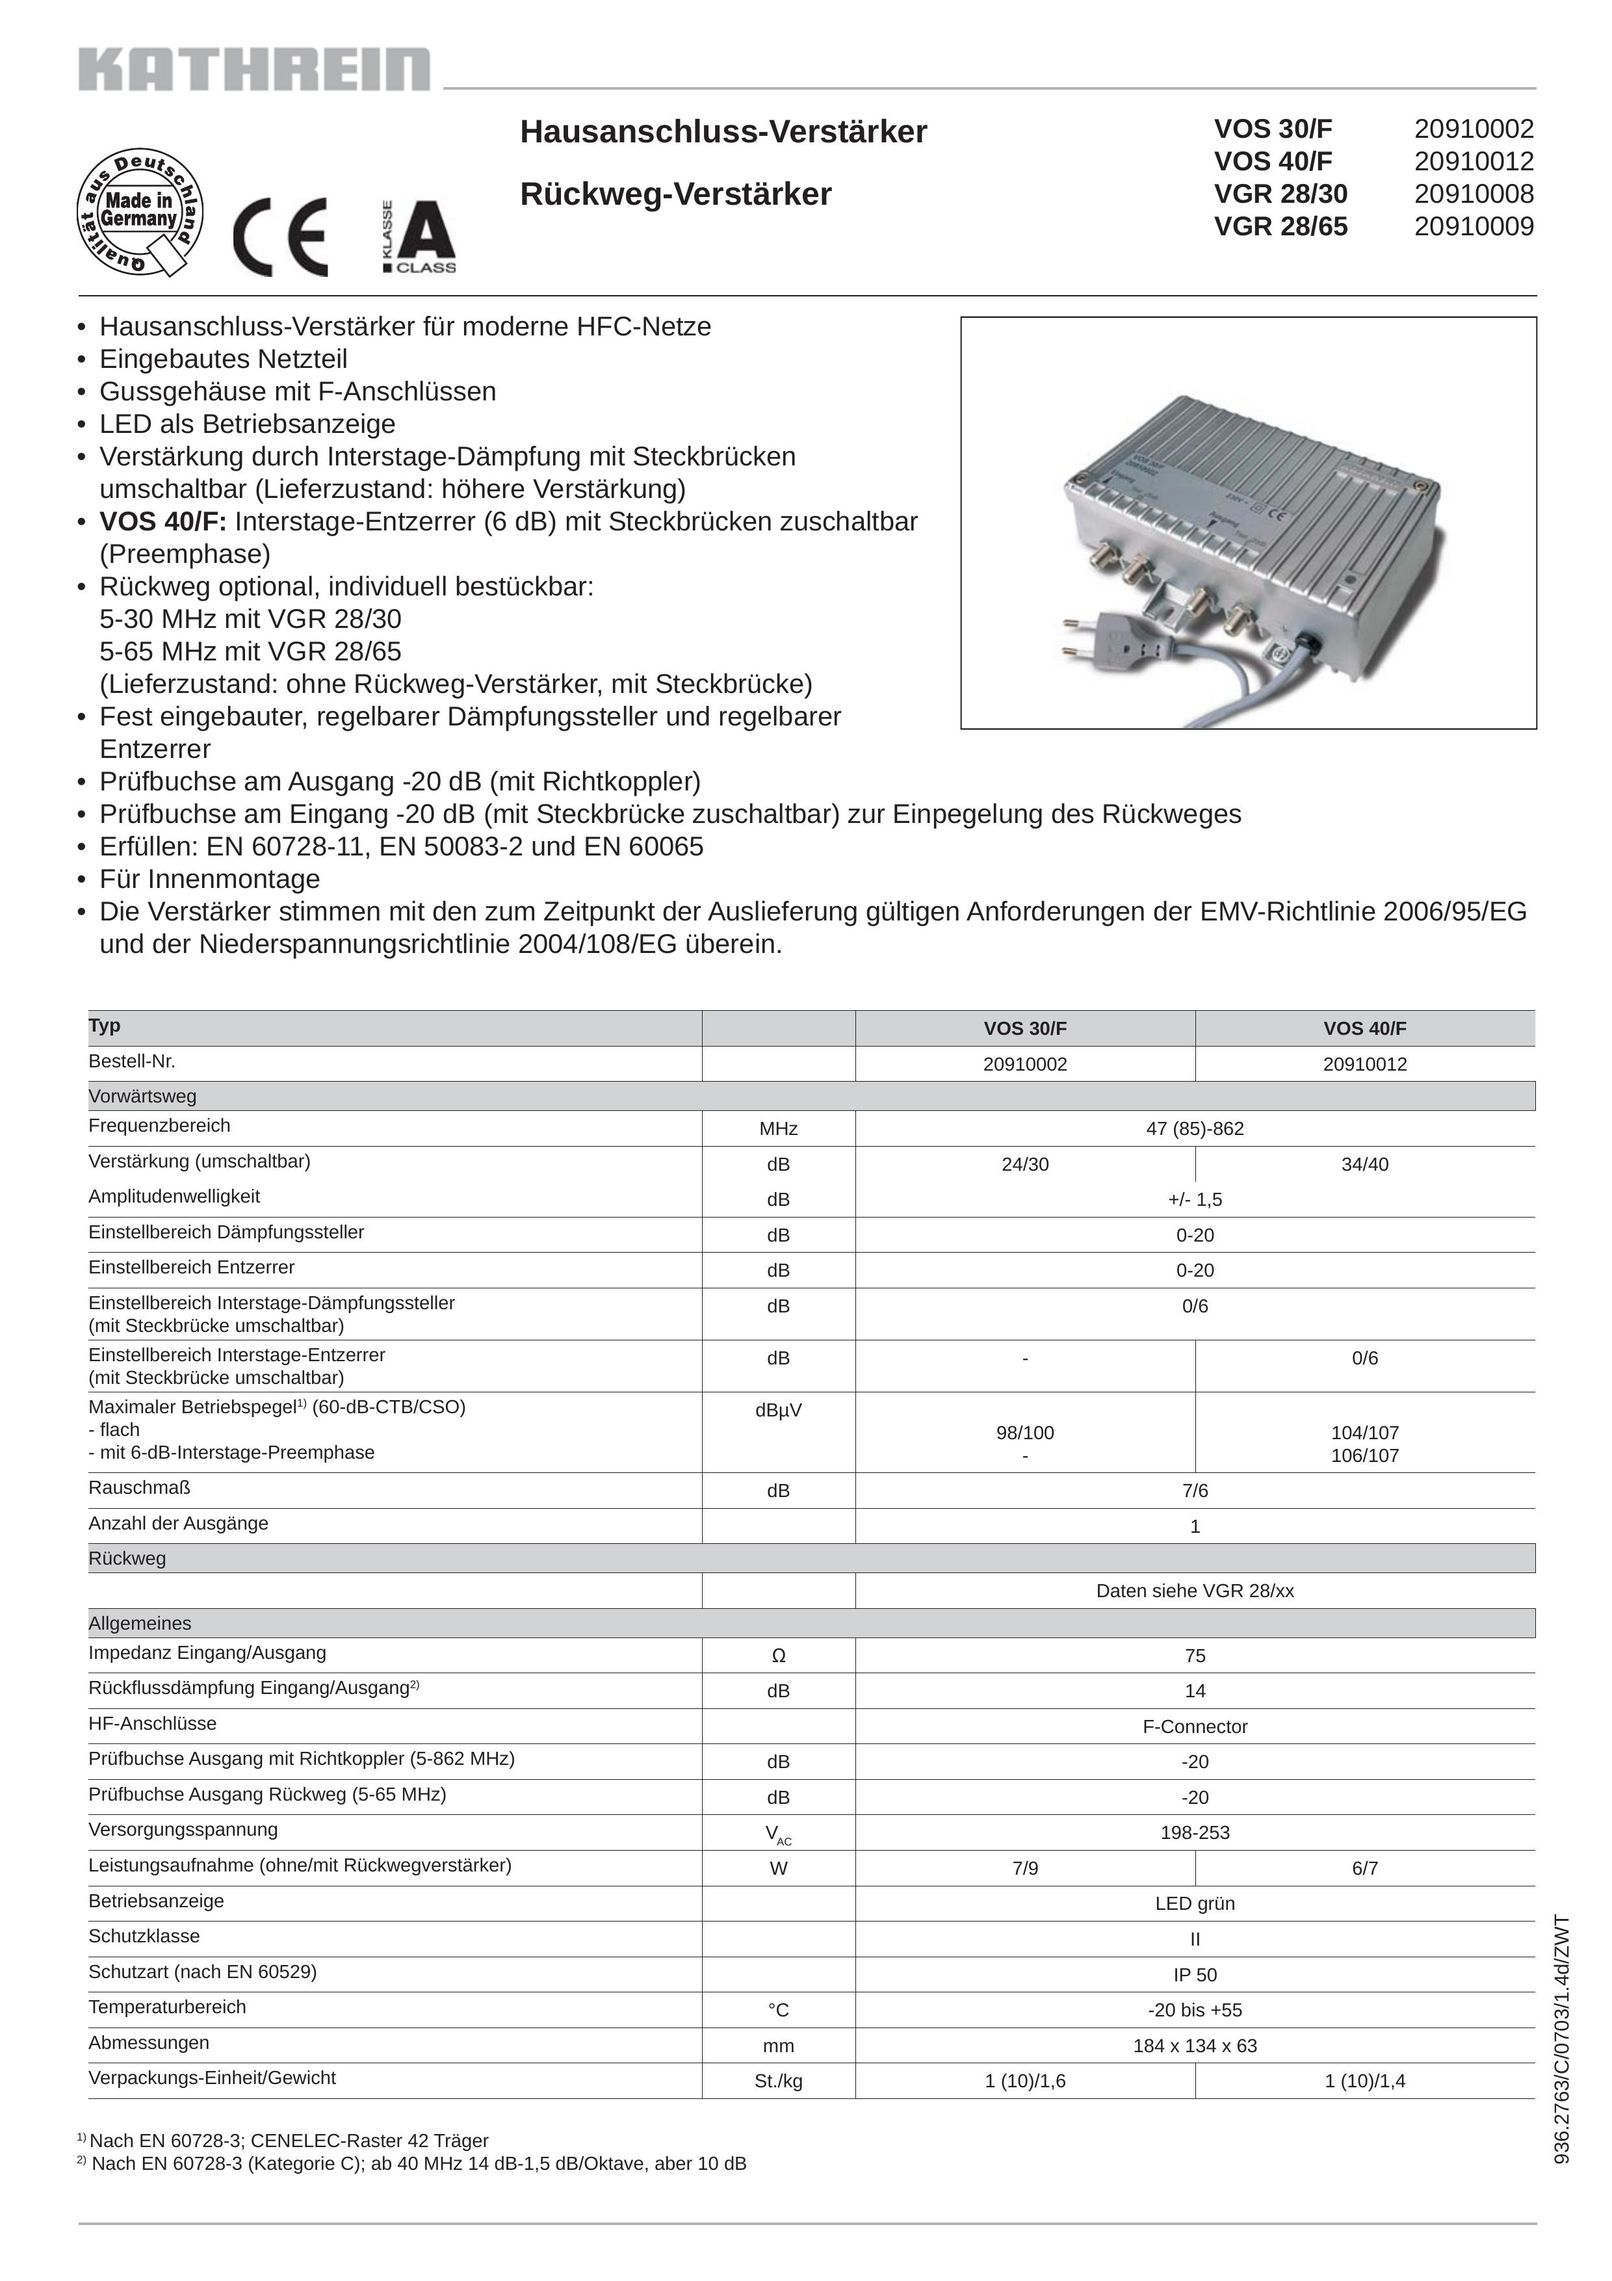 Kathrein VOS 30/F Car Amplifier User Manual